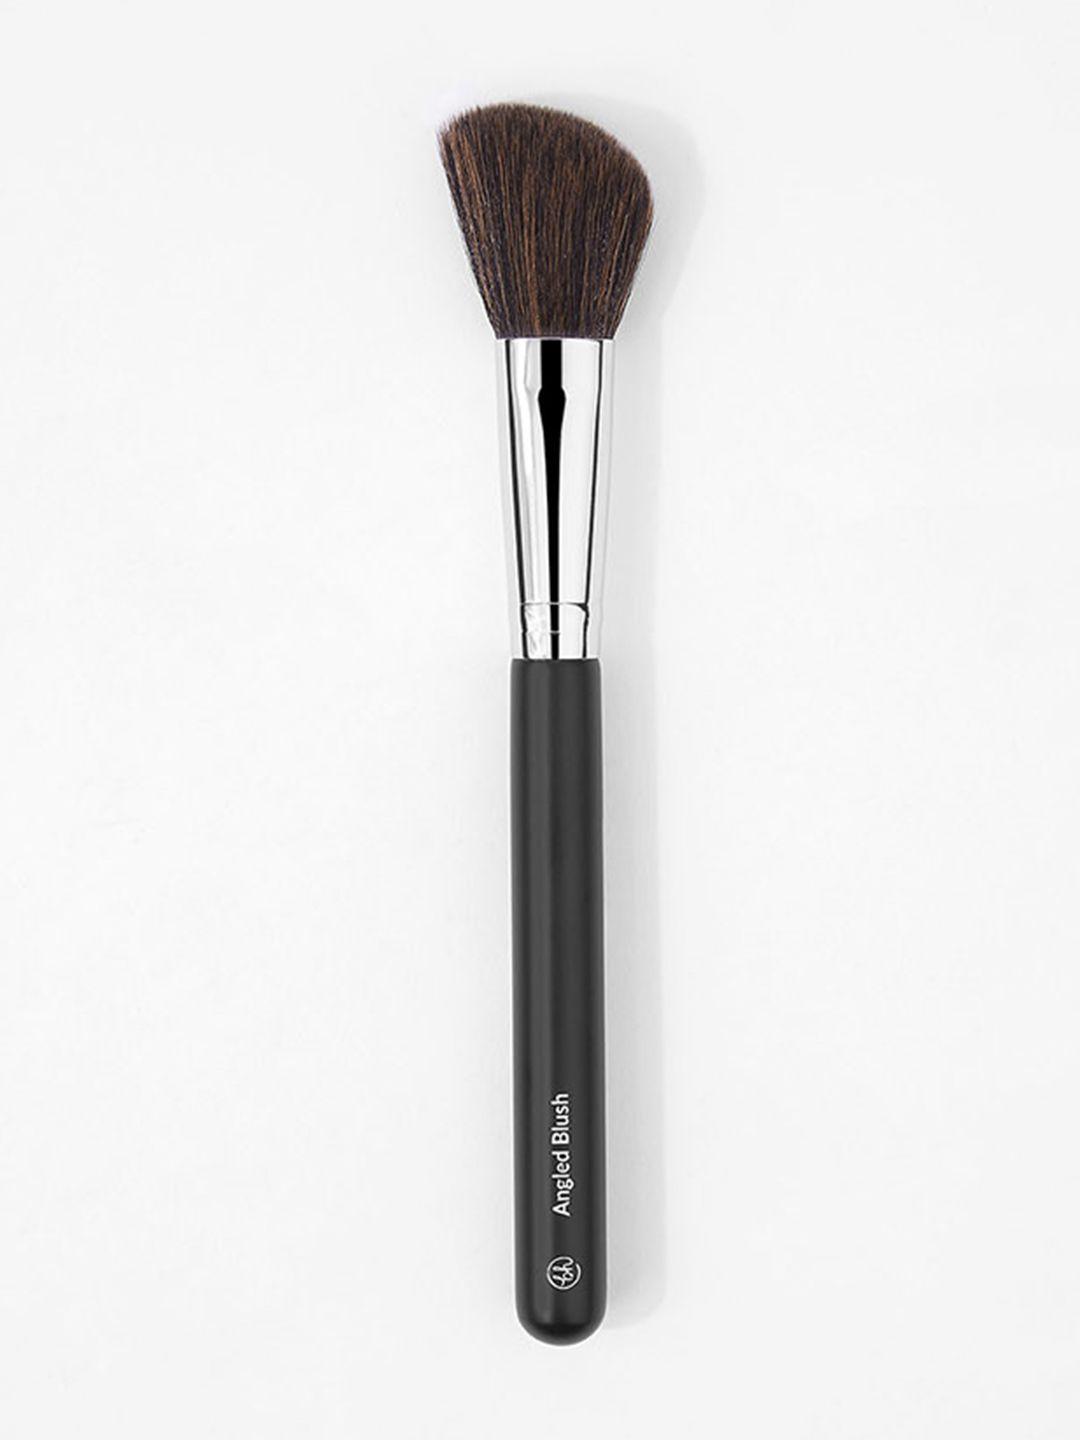 bh cosmetics super soft vegan bristles angled blush makeup brush - black